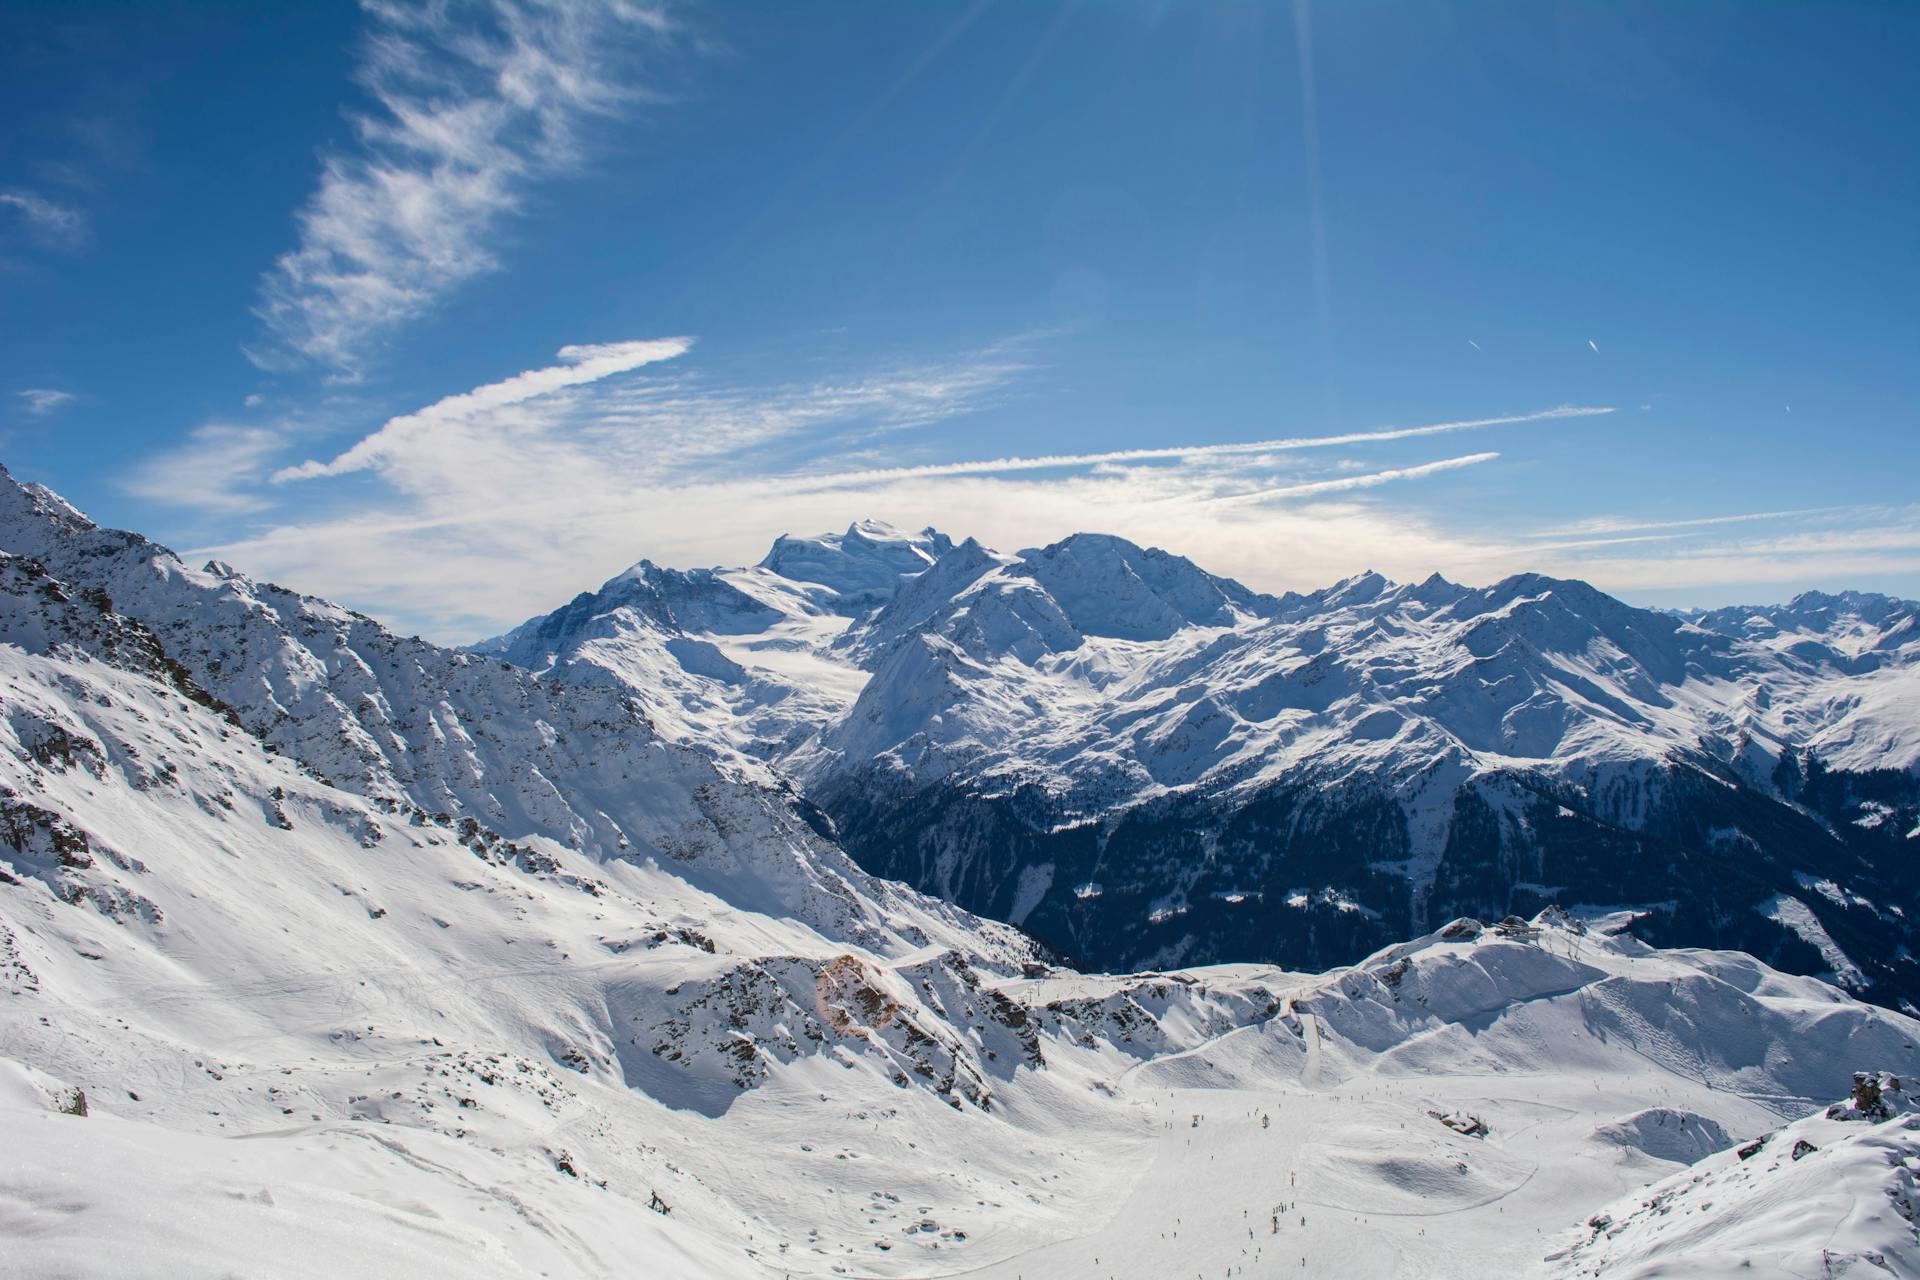 Snowy landscape of Nendaz ski resort in Switzerland